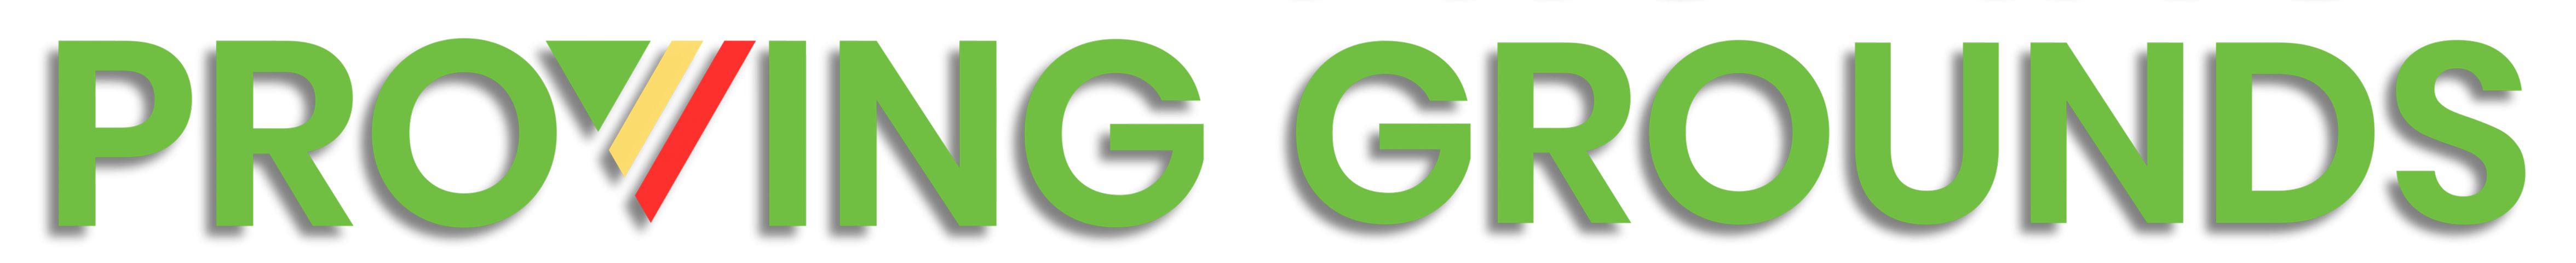 Proving Grounds Logo